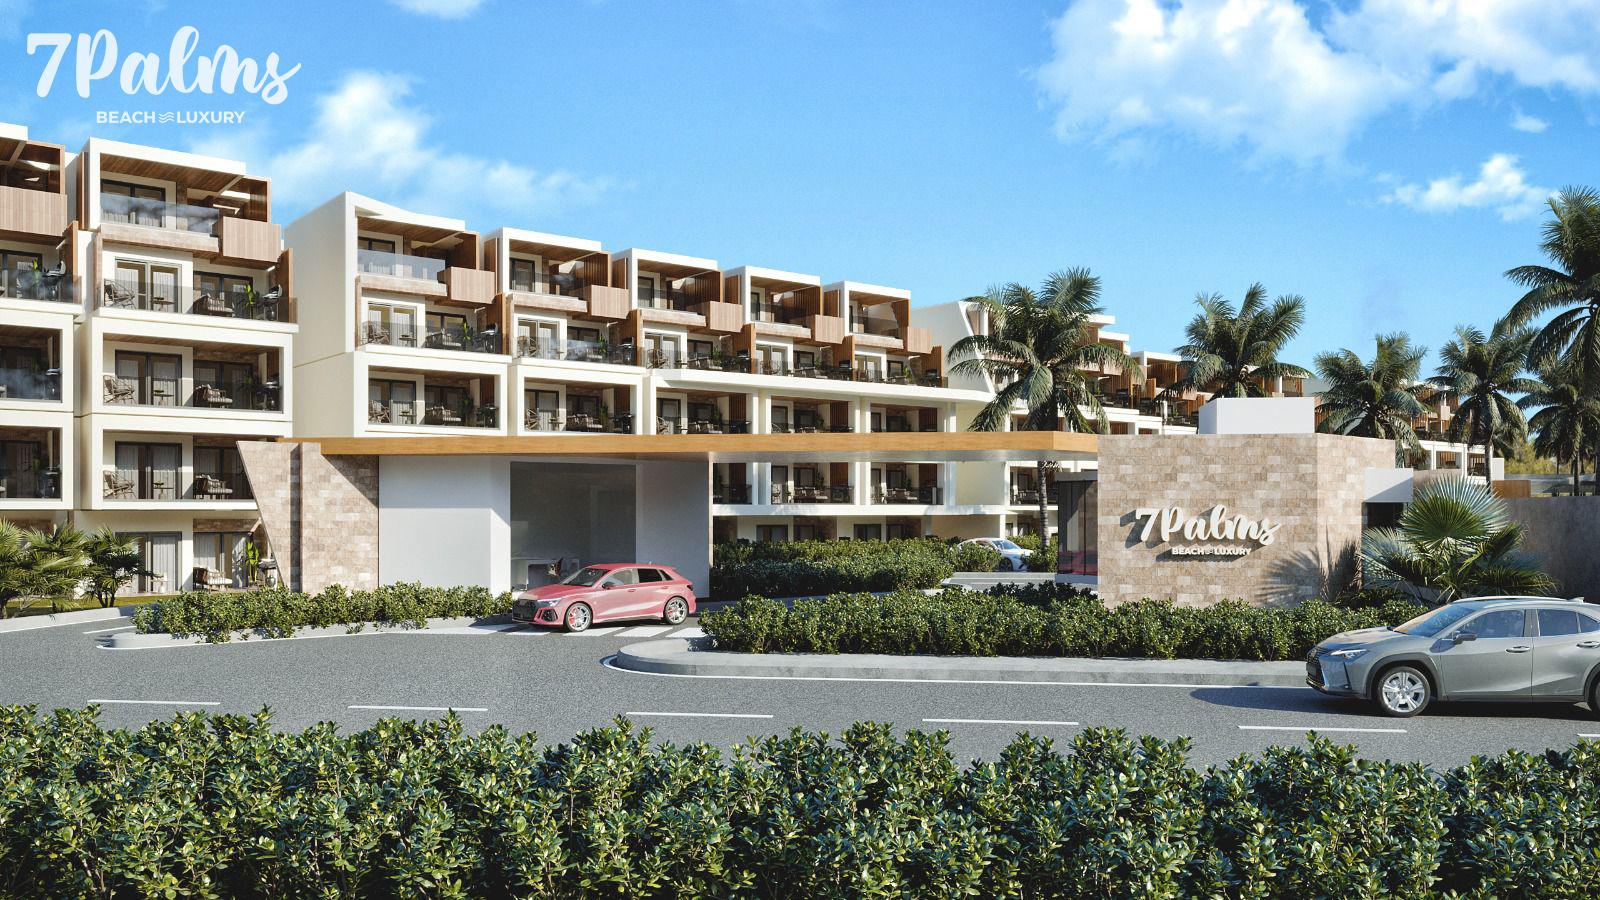 apartamentos - 7 Palms Beach Luxury Espectacular Proyecto en Venta Punta Cana. 2